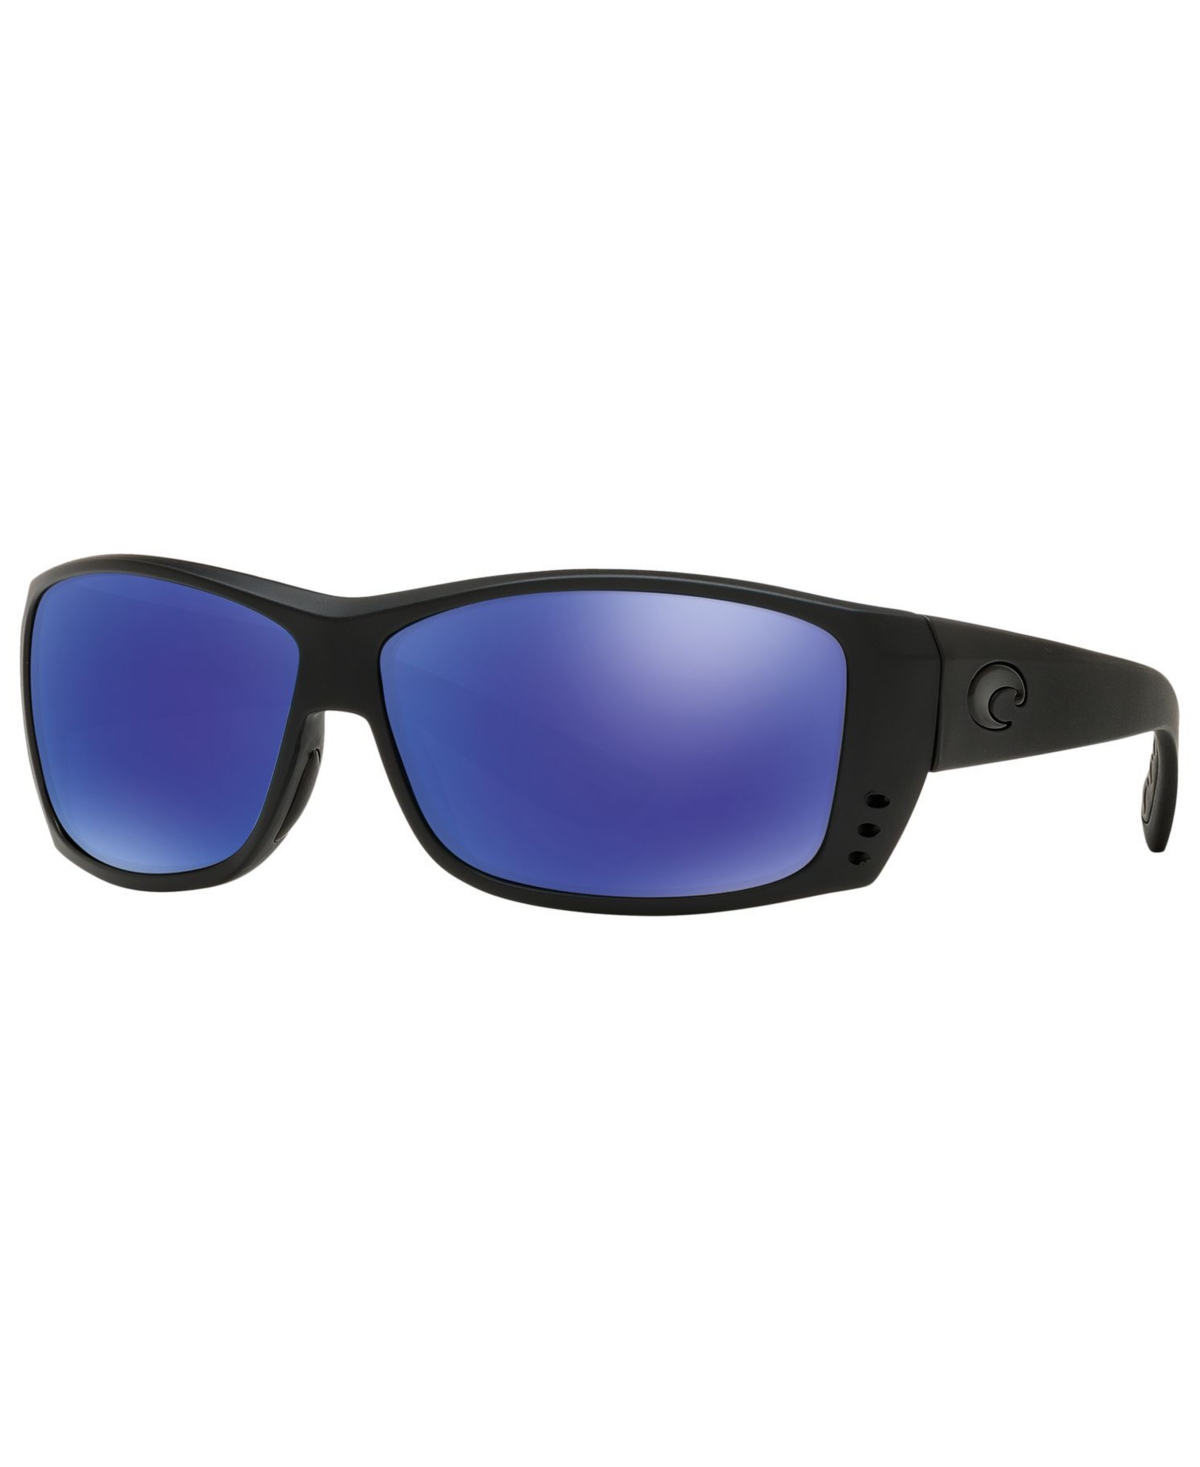 Polarized Sunglasses, Cat Cay 61P - BLACK BLACK/ BLUE MIRROR POLAR